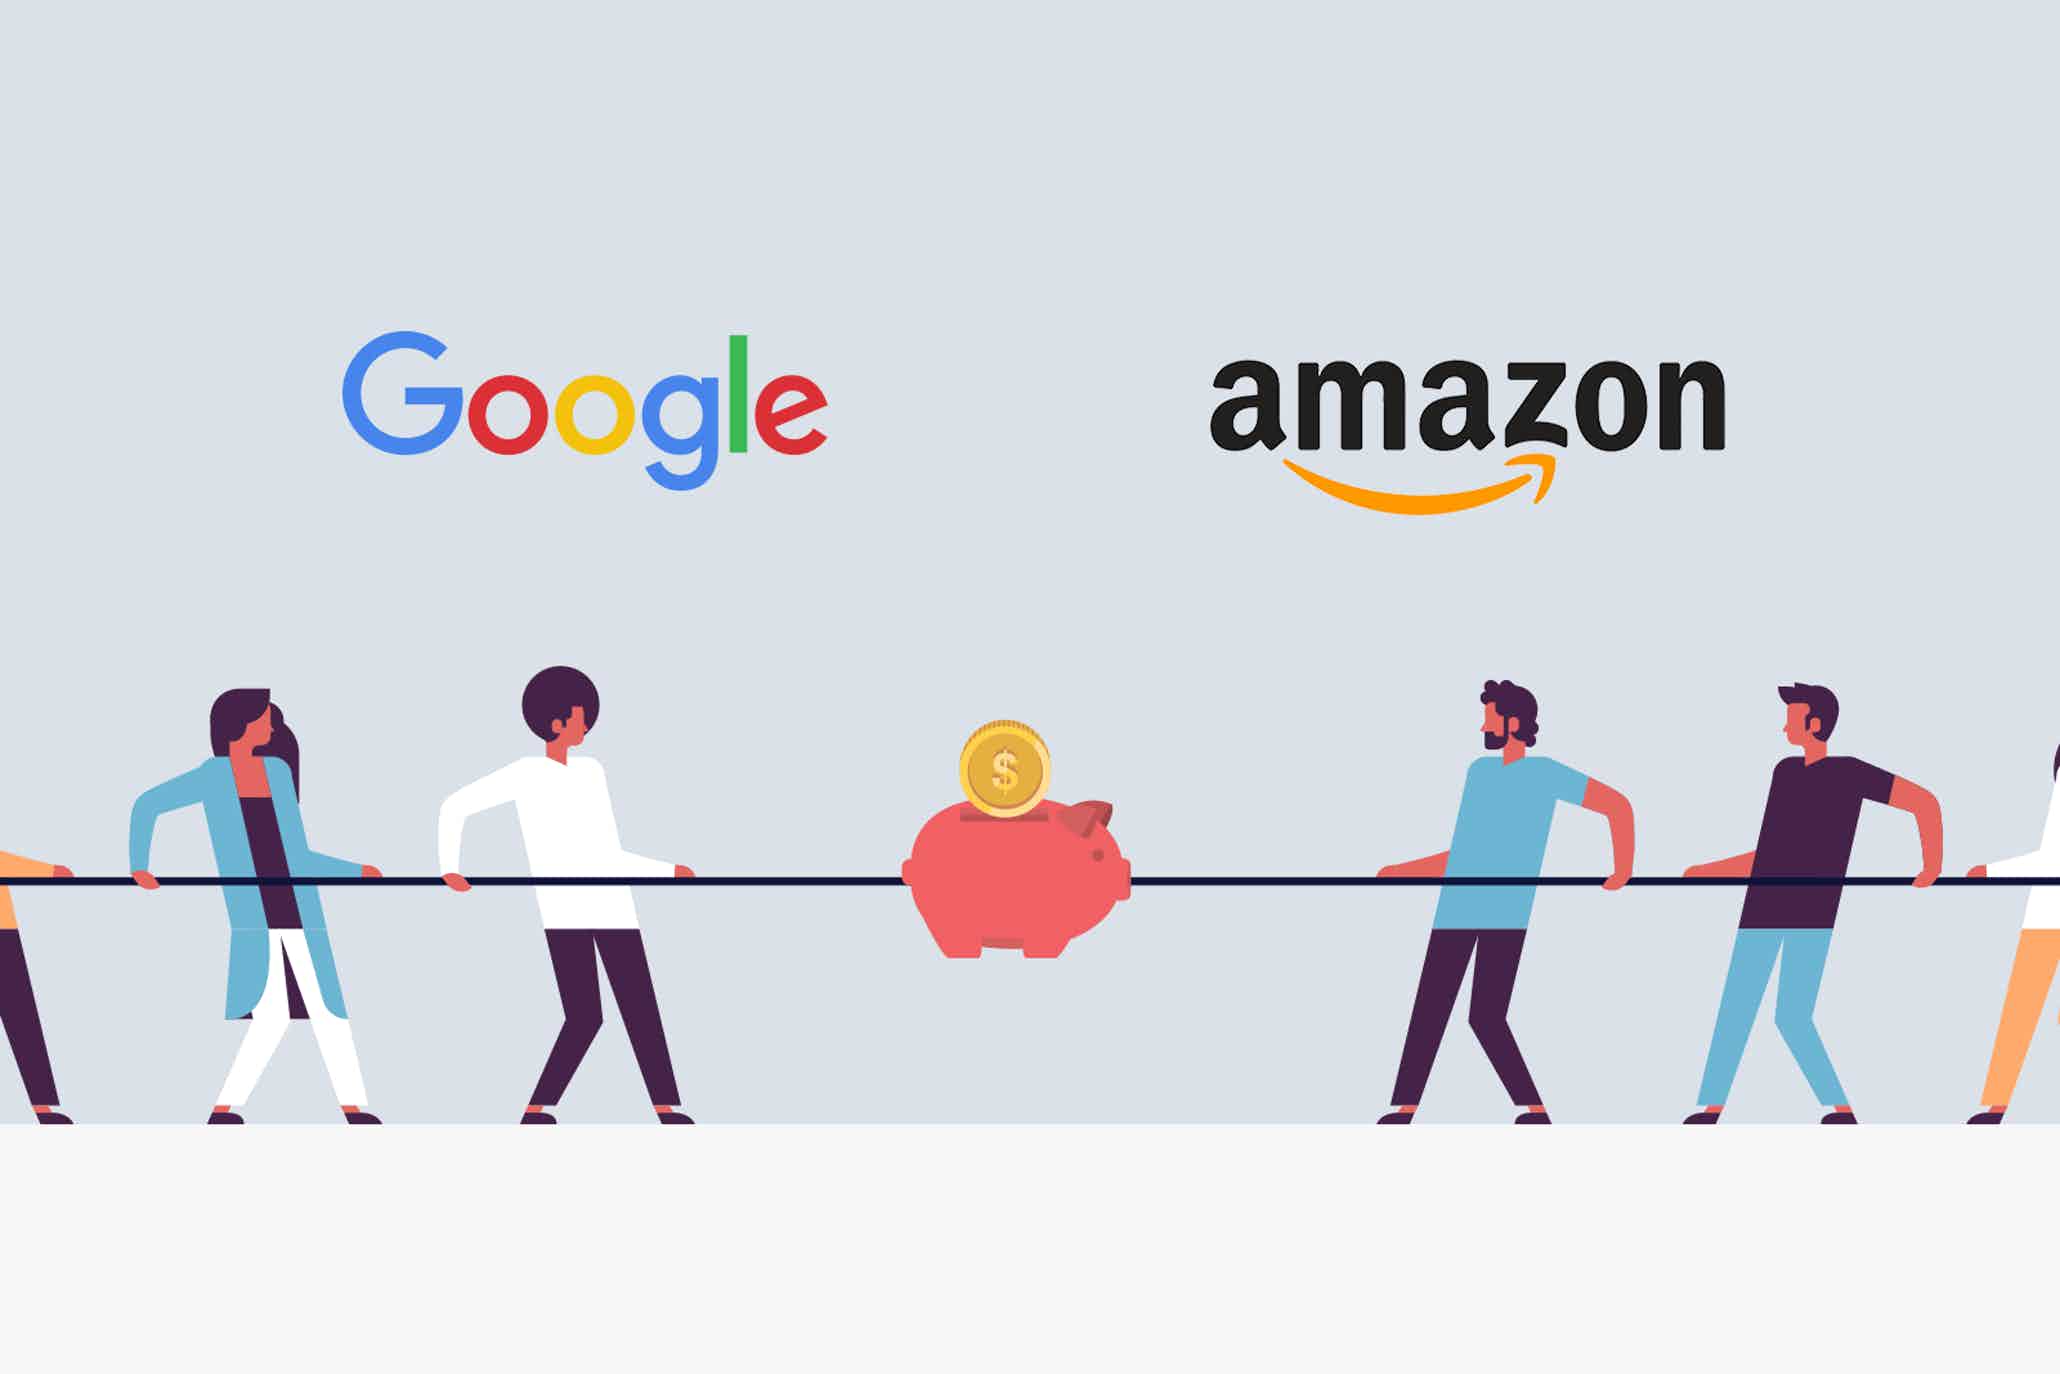 google vs amazon